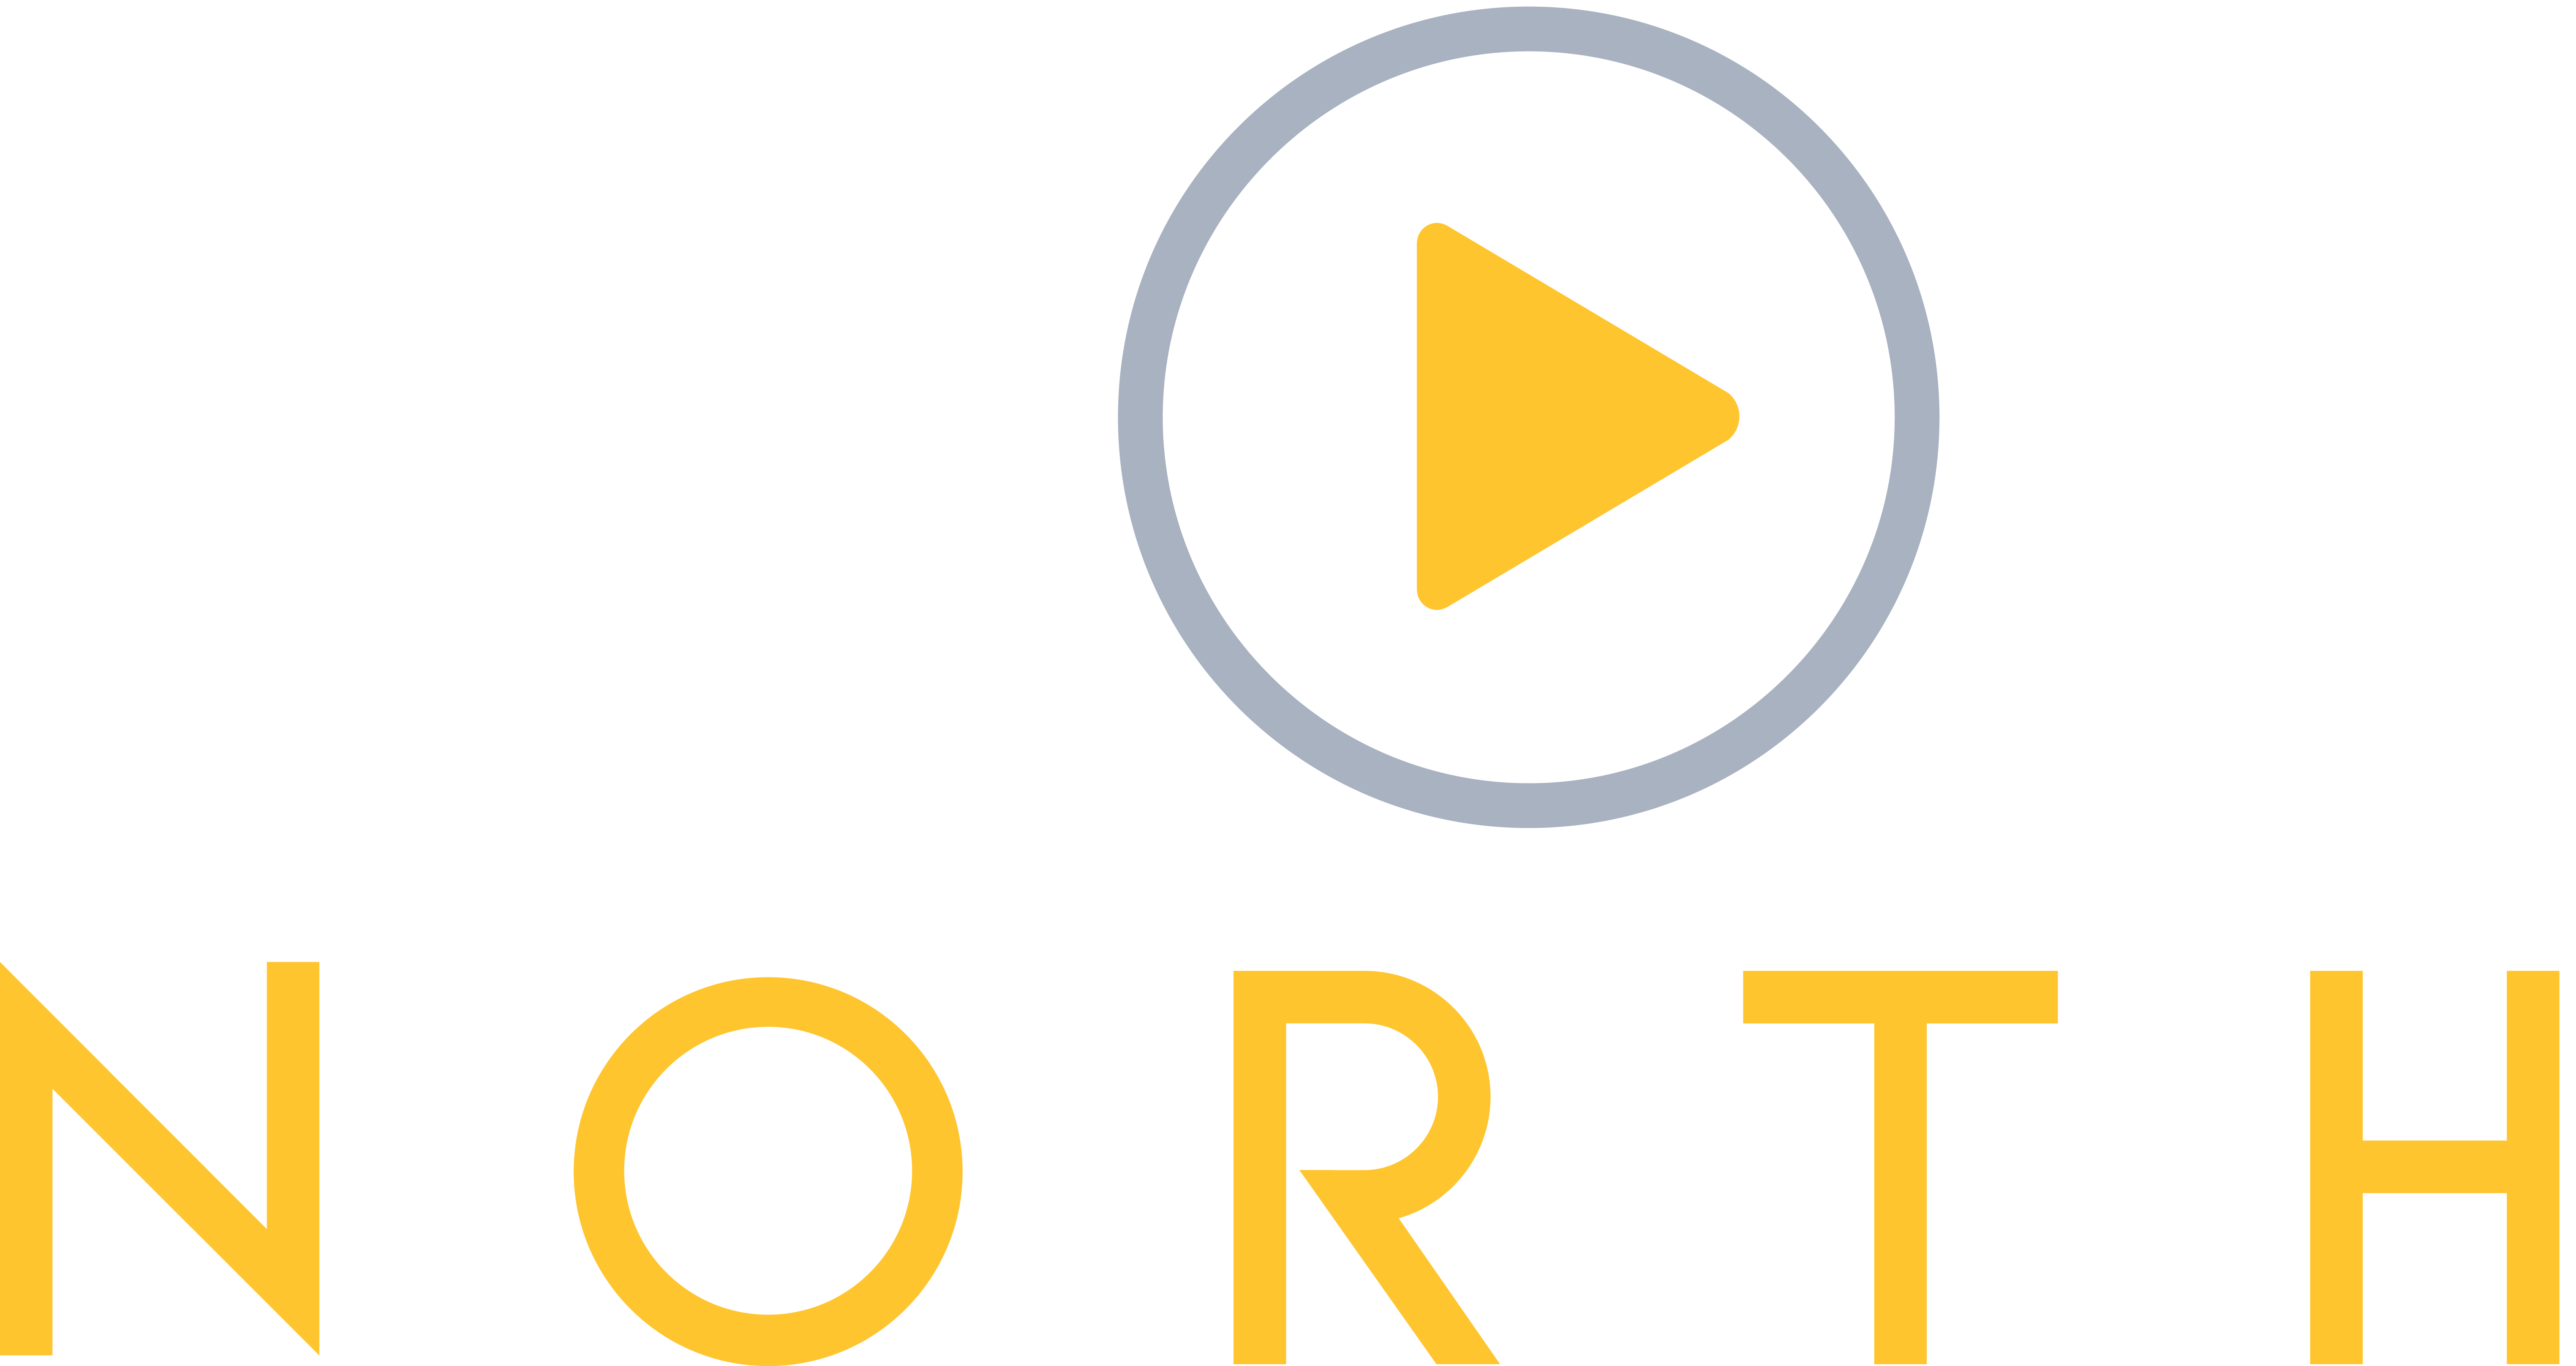 SKOR Logo - SKOR North – vikings